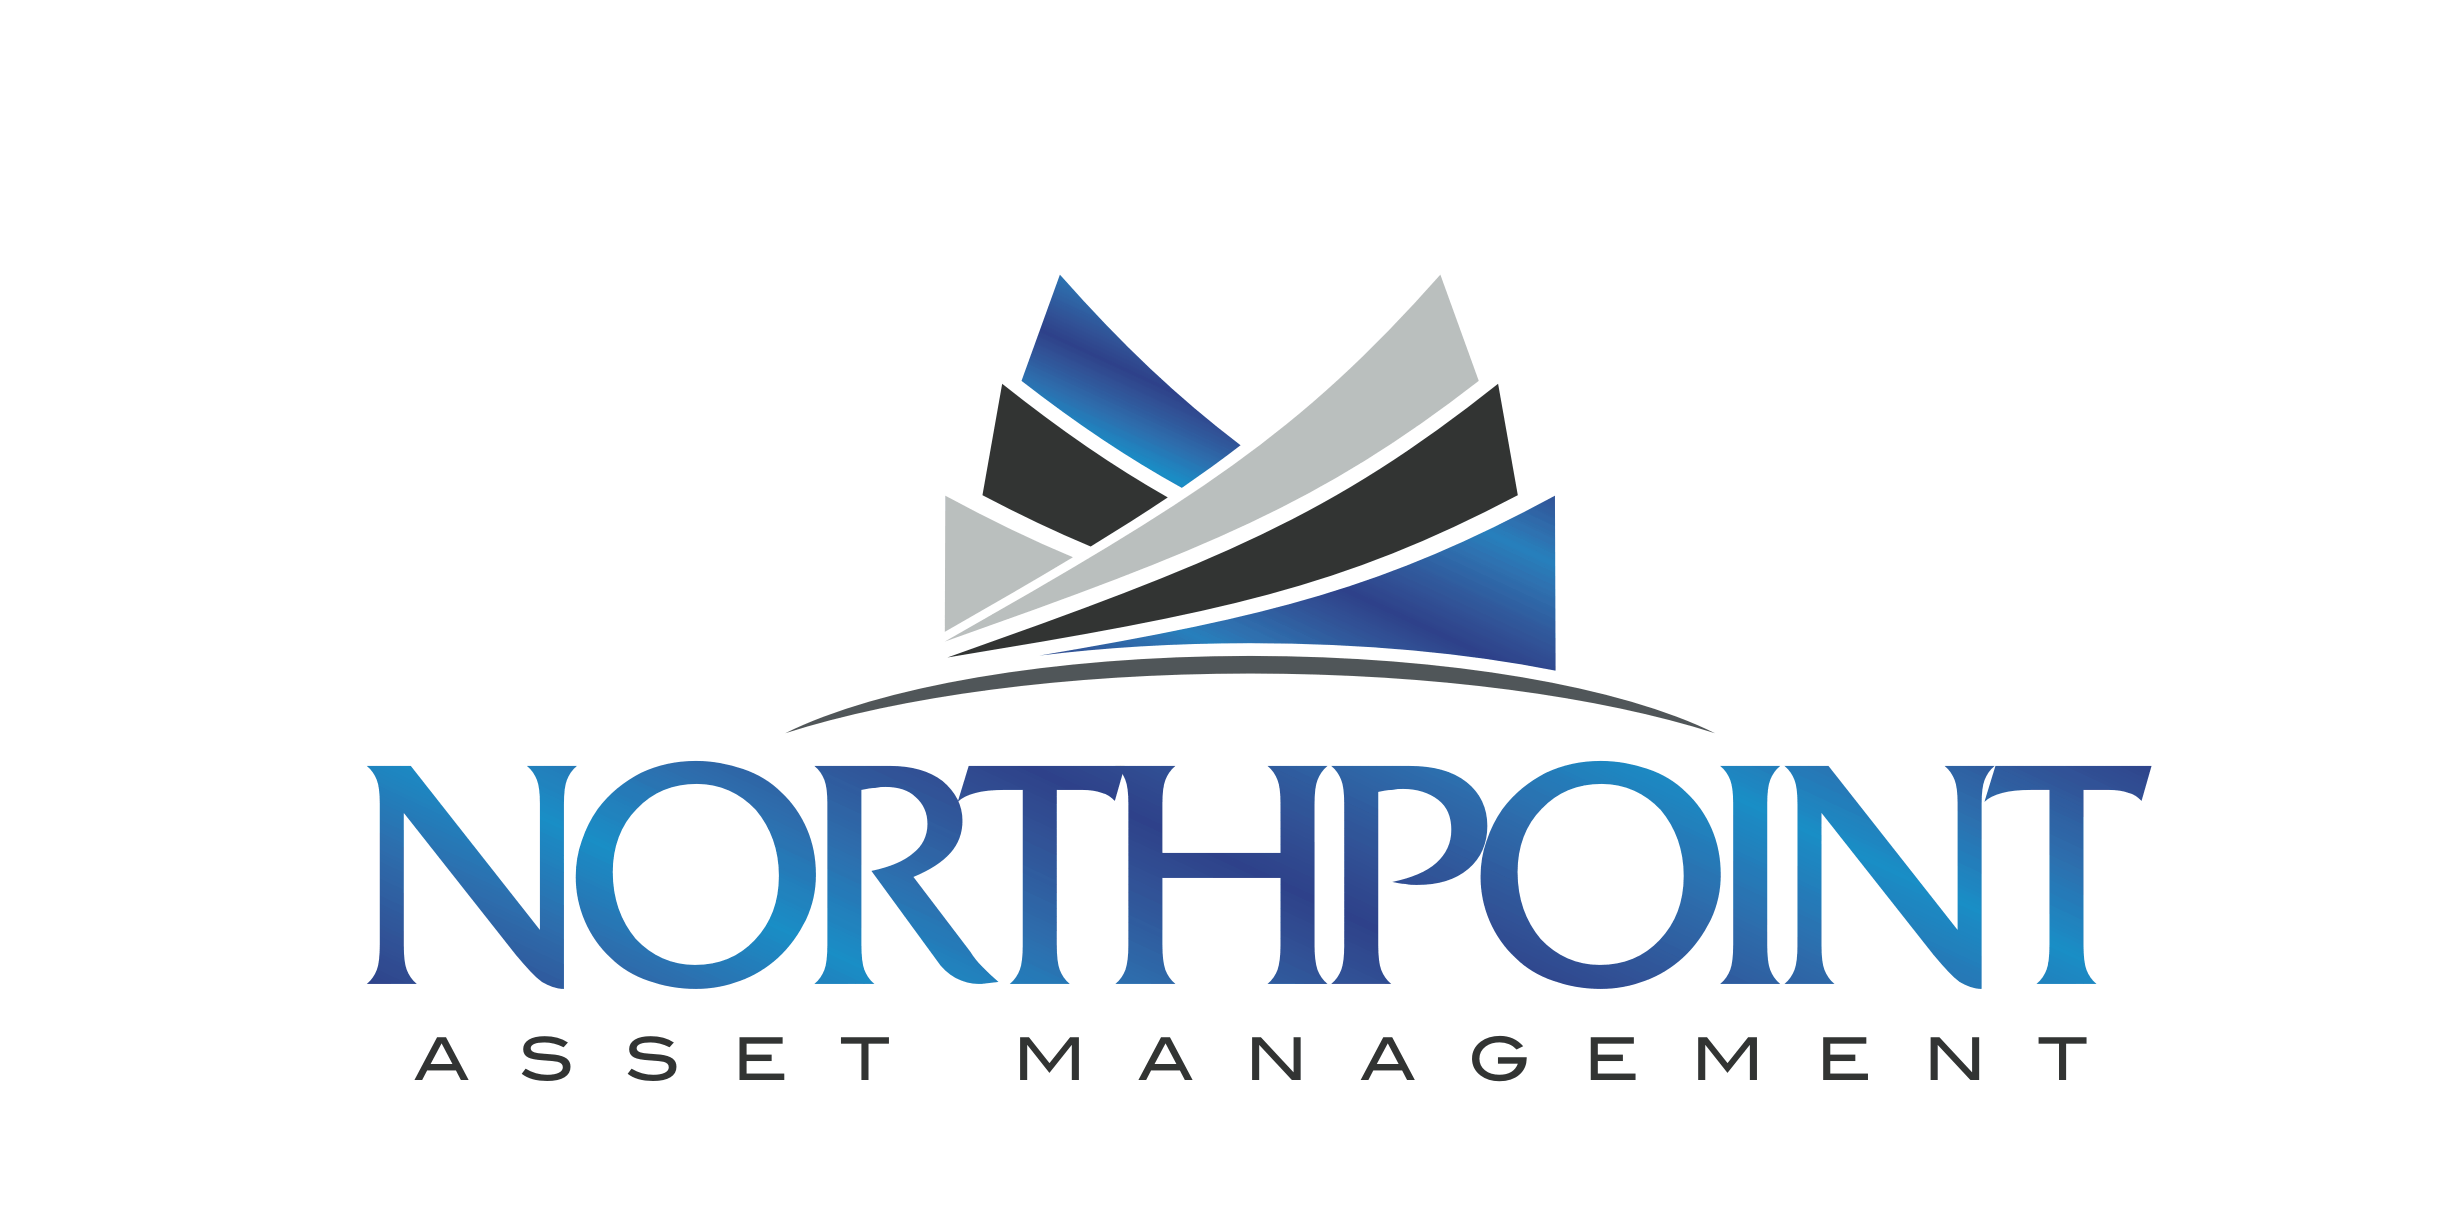 Northpoint Asset Management logo